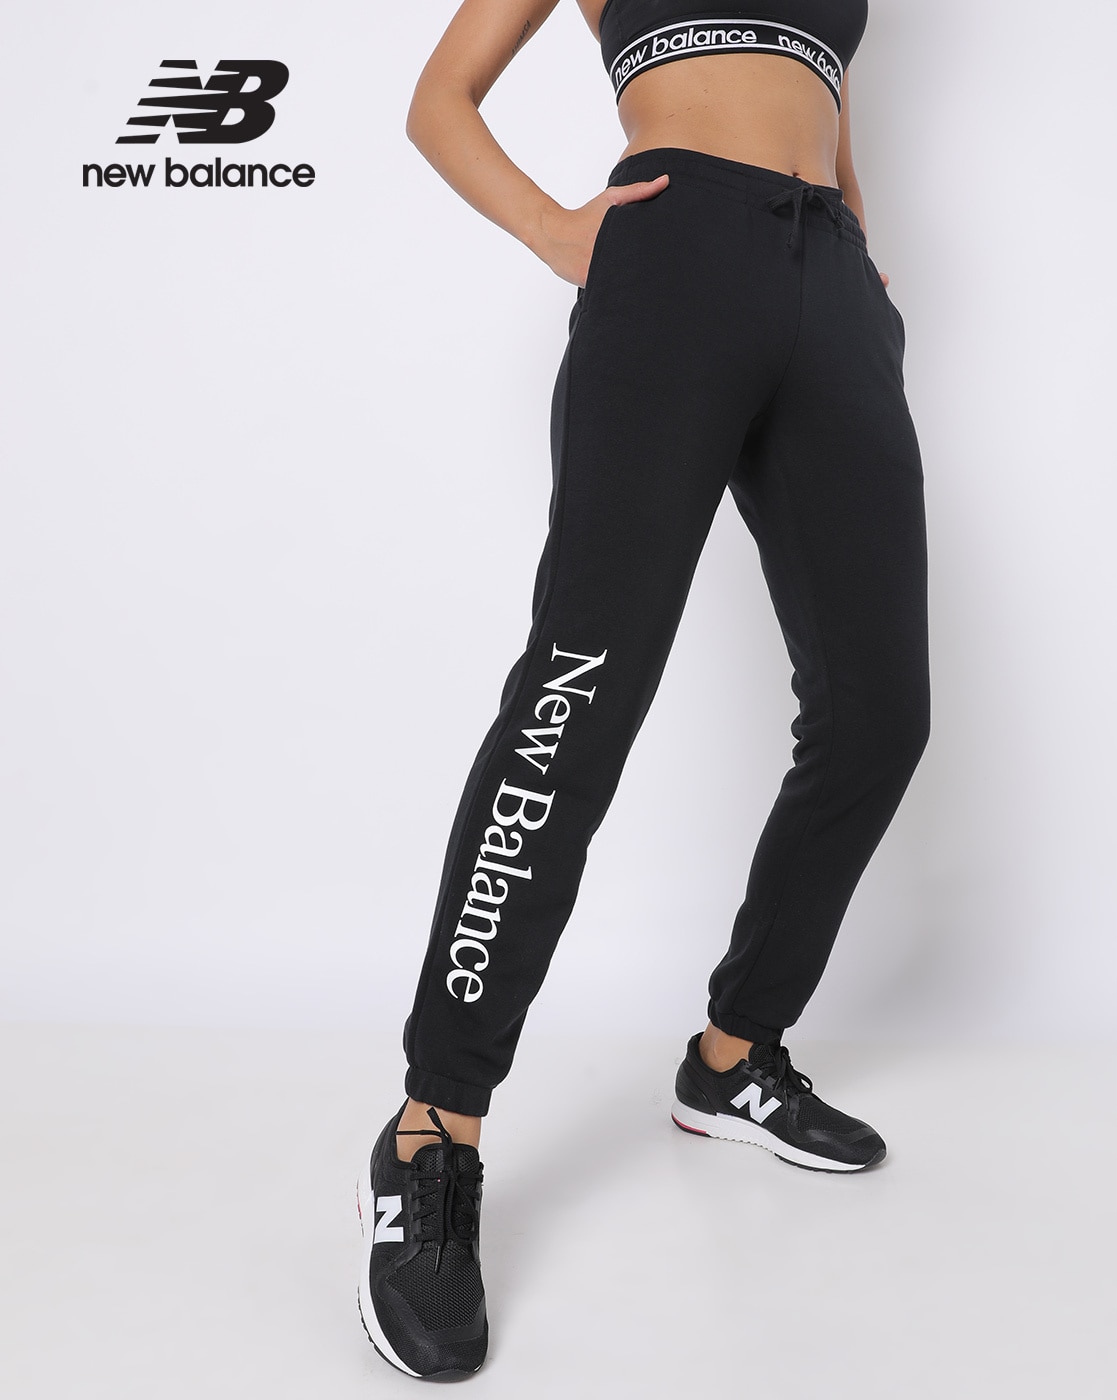 Men's New Balance Pants - Joe's New Balance Outlet